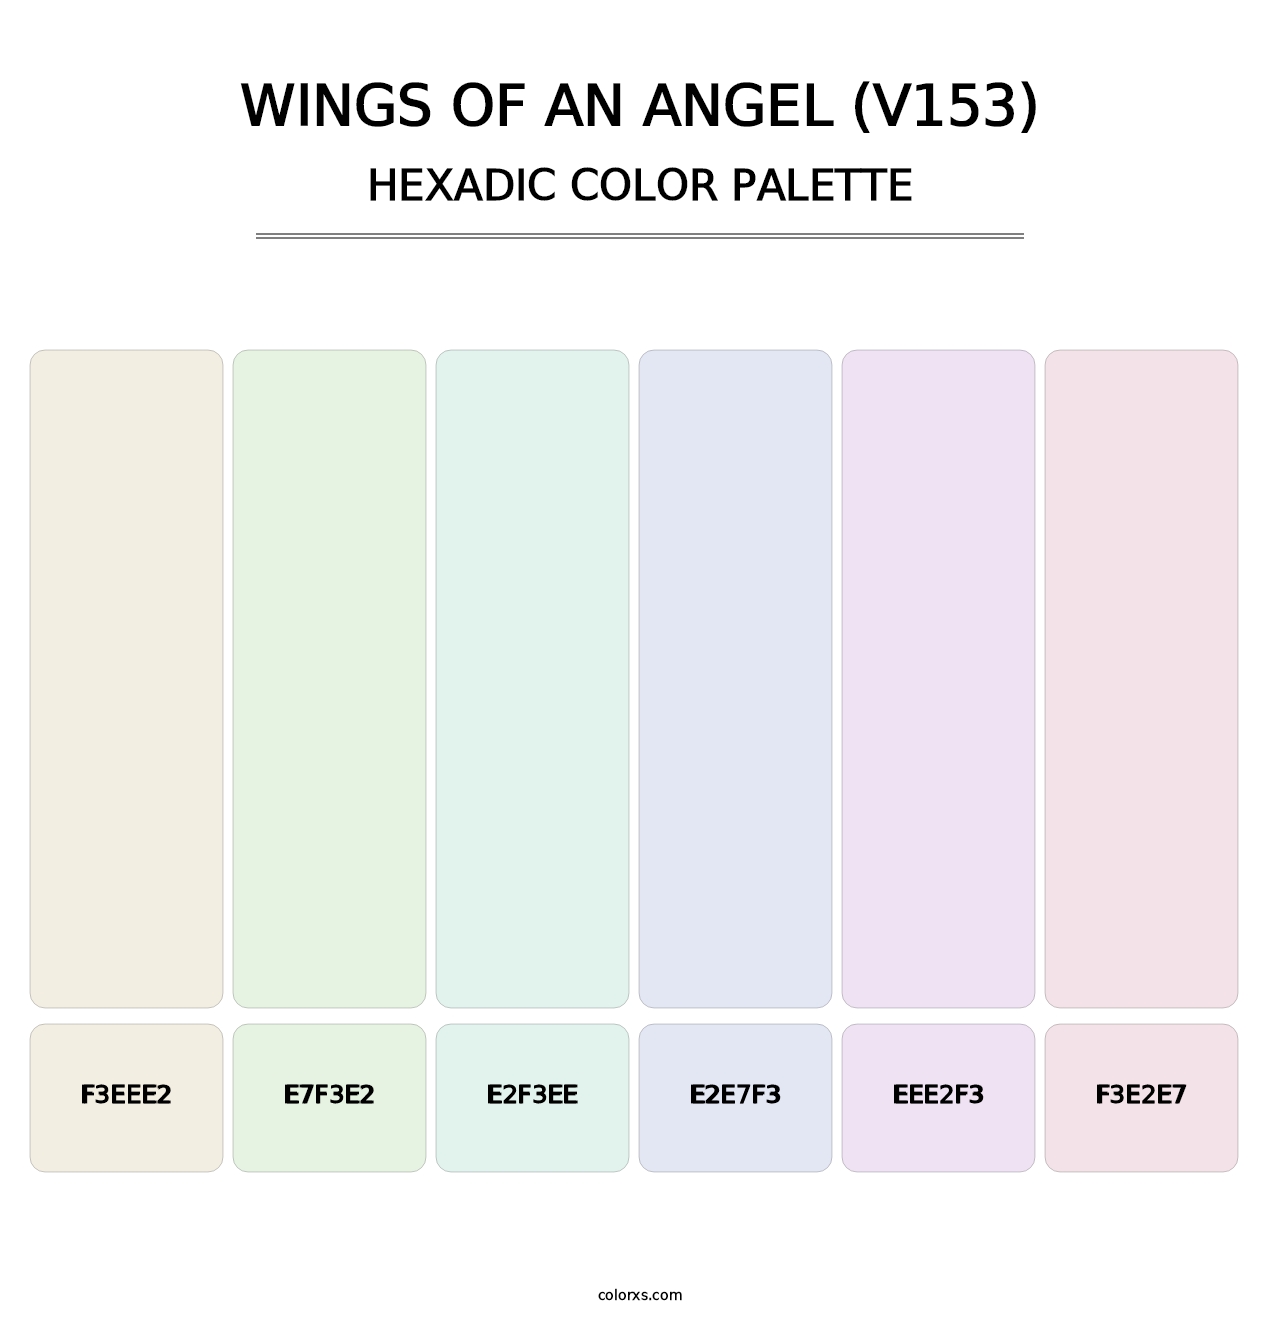 Wings of an Angel (V153) - Hexadic Color Palette